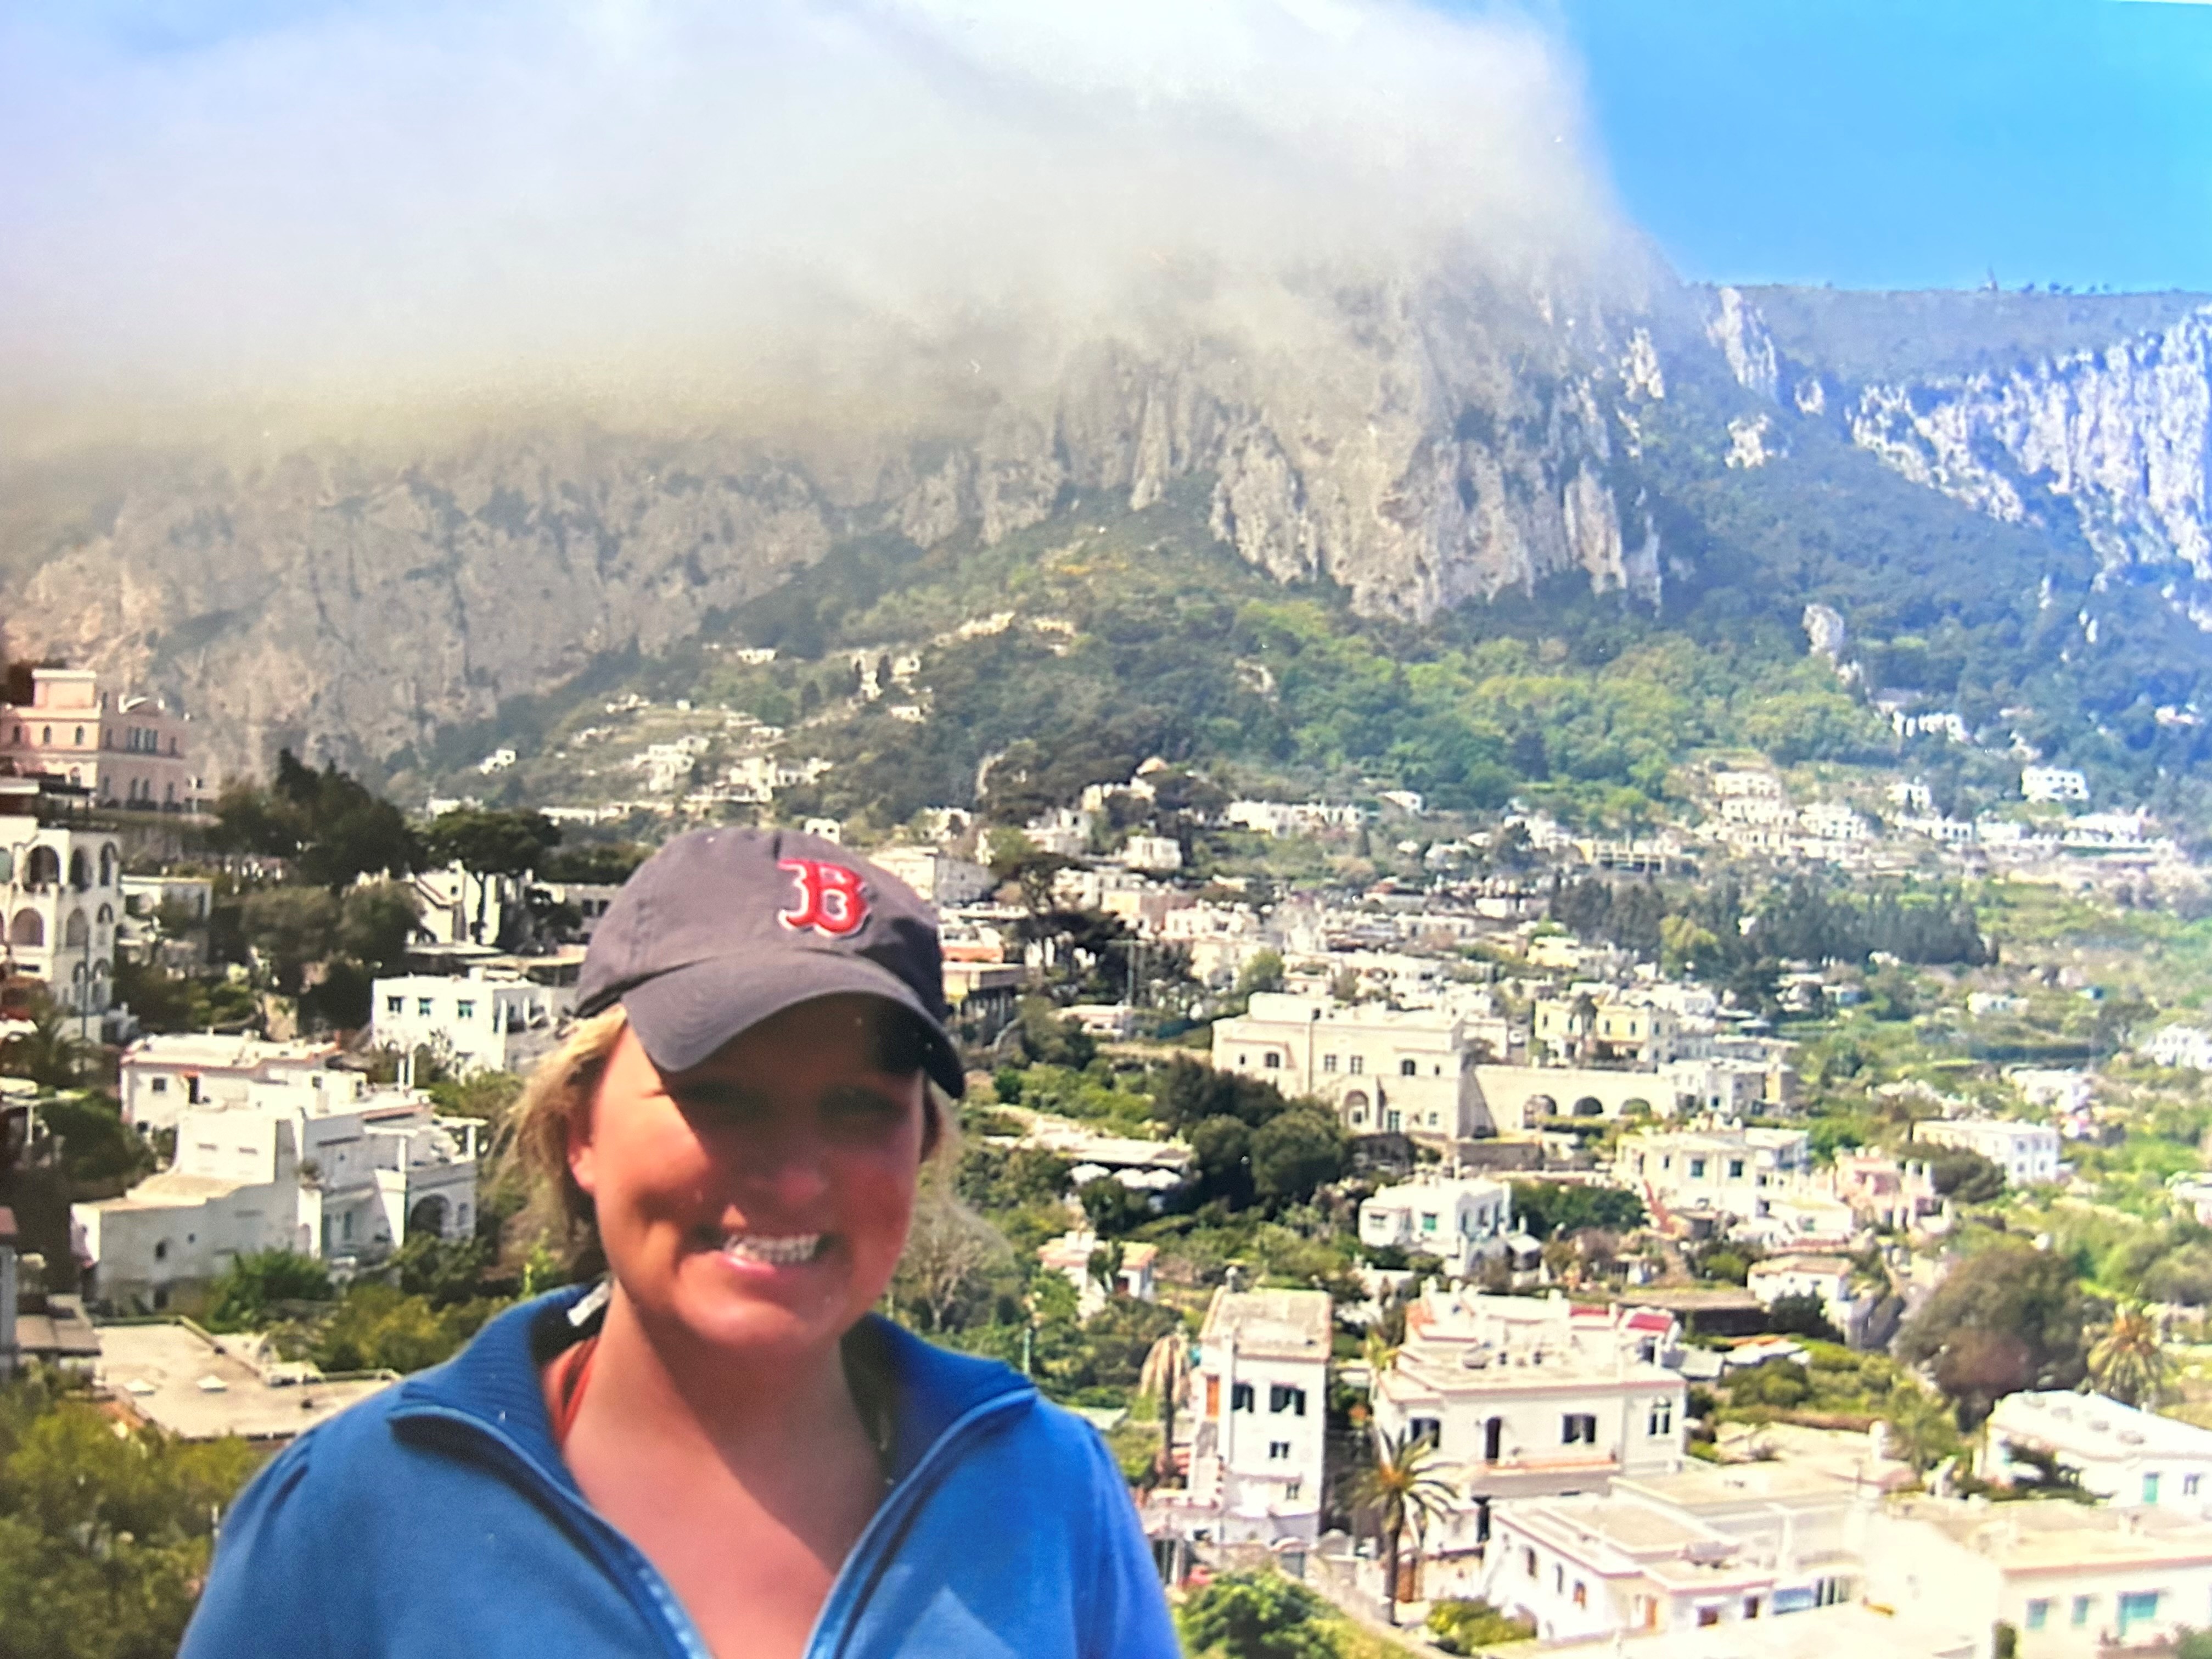 ACIS Staff member Heidi in Capri